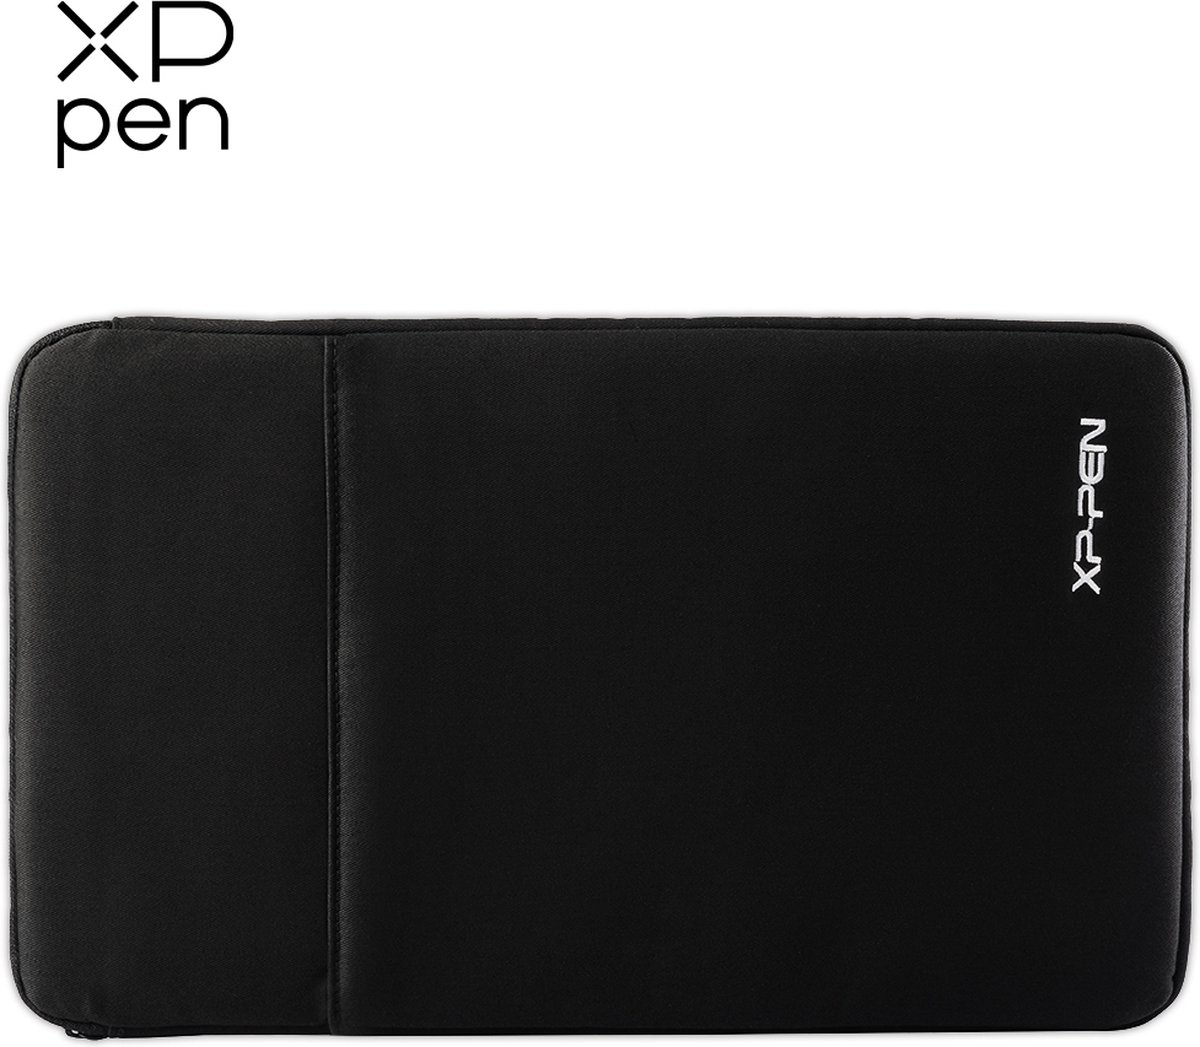 XPPen AC48 Beschermhoes voor 10 inch 12 inch grafisch tablet - Deco01/ Deco02 / Deco03 / Artist 12/ Artist 12 PRO/ Artist 10 2nd Gen / Artist 12 2nd Gen